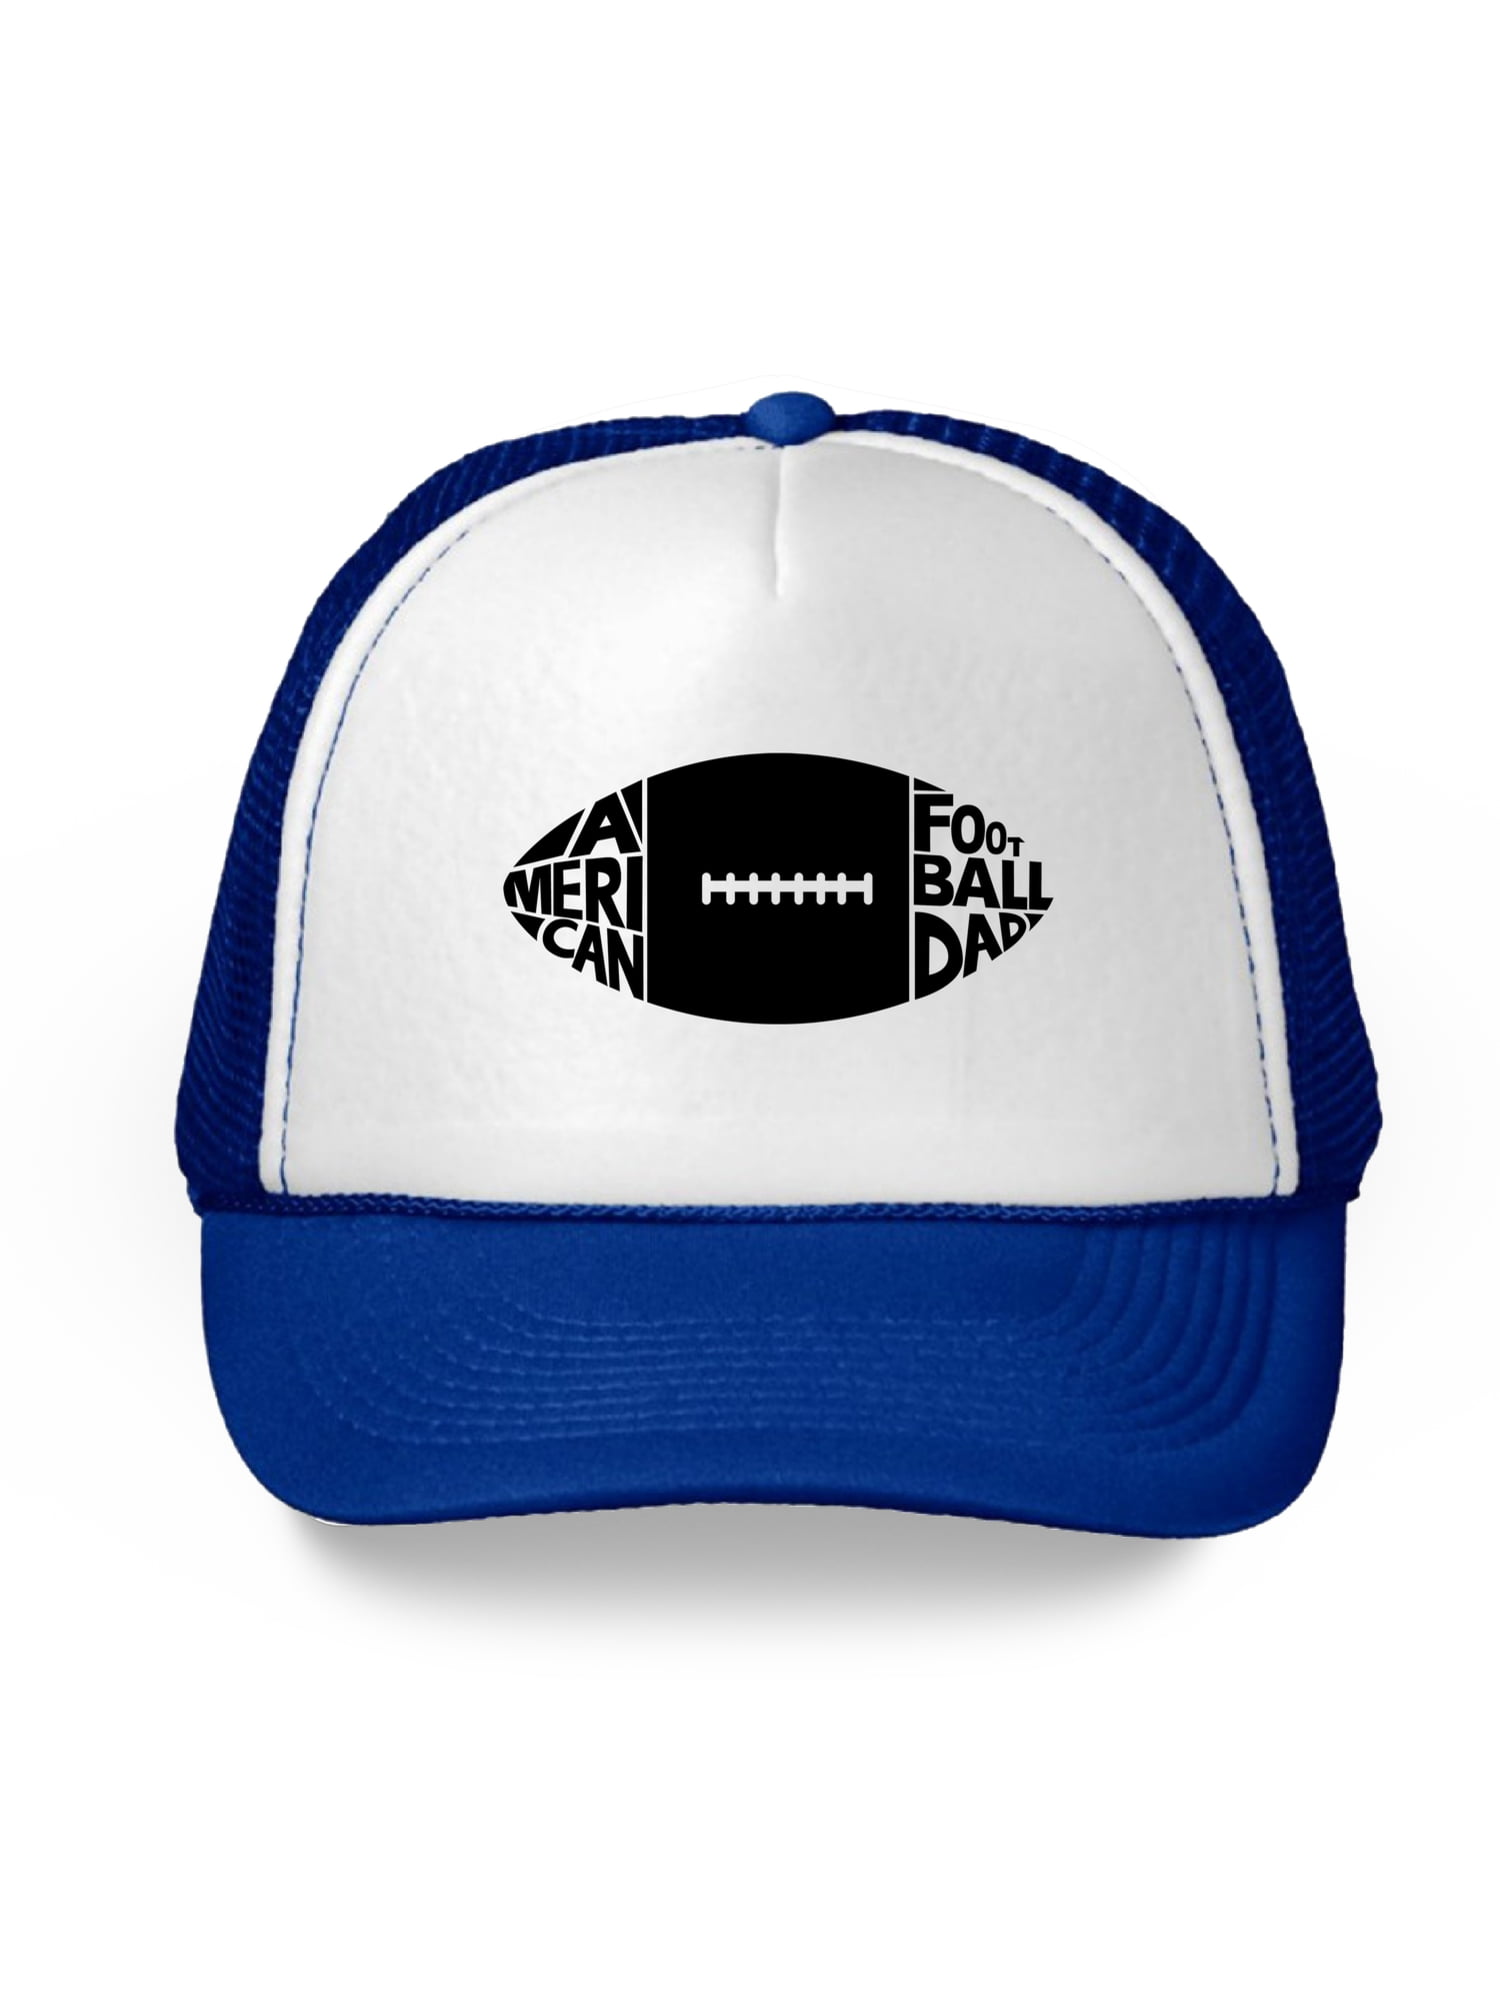 football trucker hats